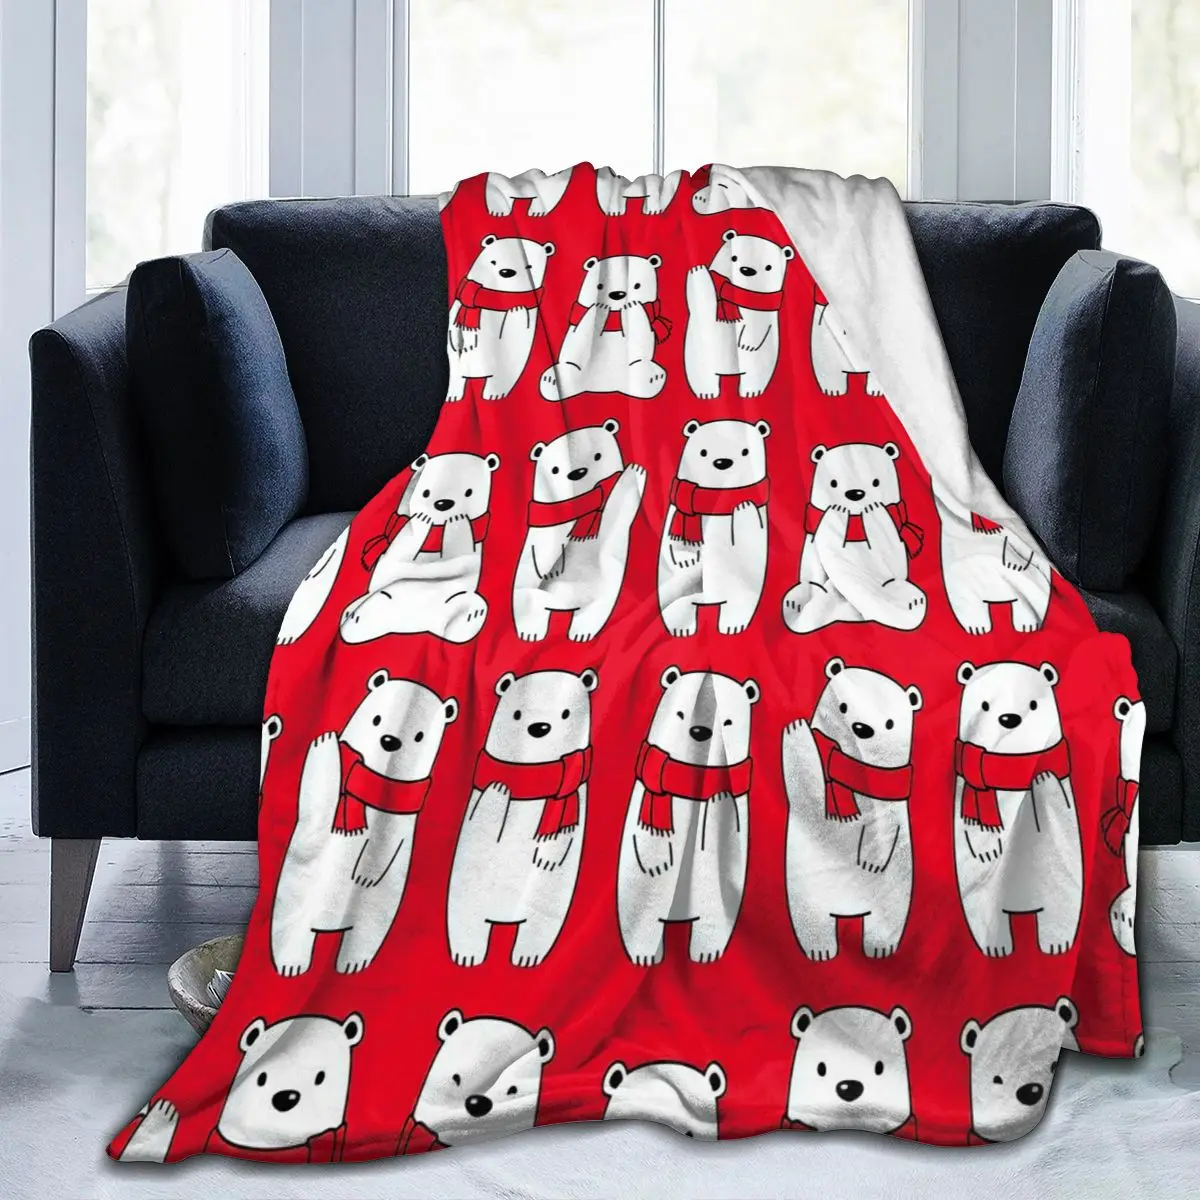 

Cartoon Animal Blanket Blanket Plaid Jigsaw Sublimation Cartoon Bedding Flannel Children's And Adult Bedroom Decor A1